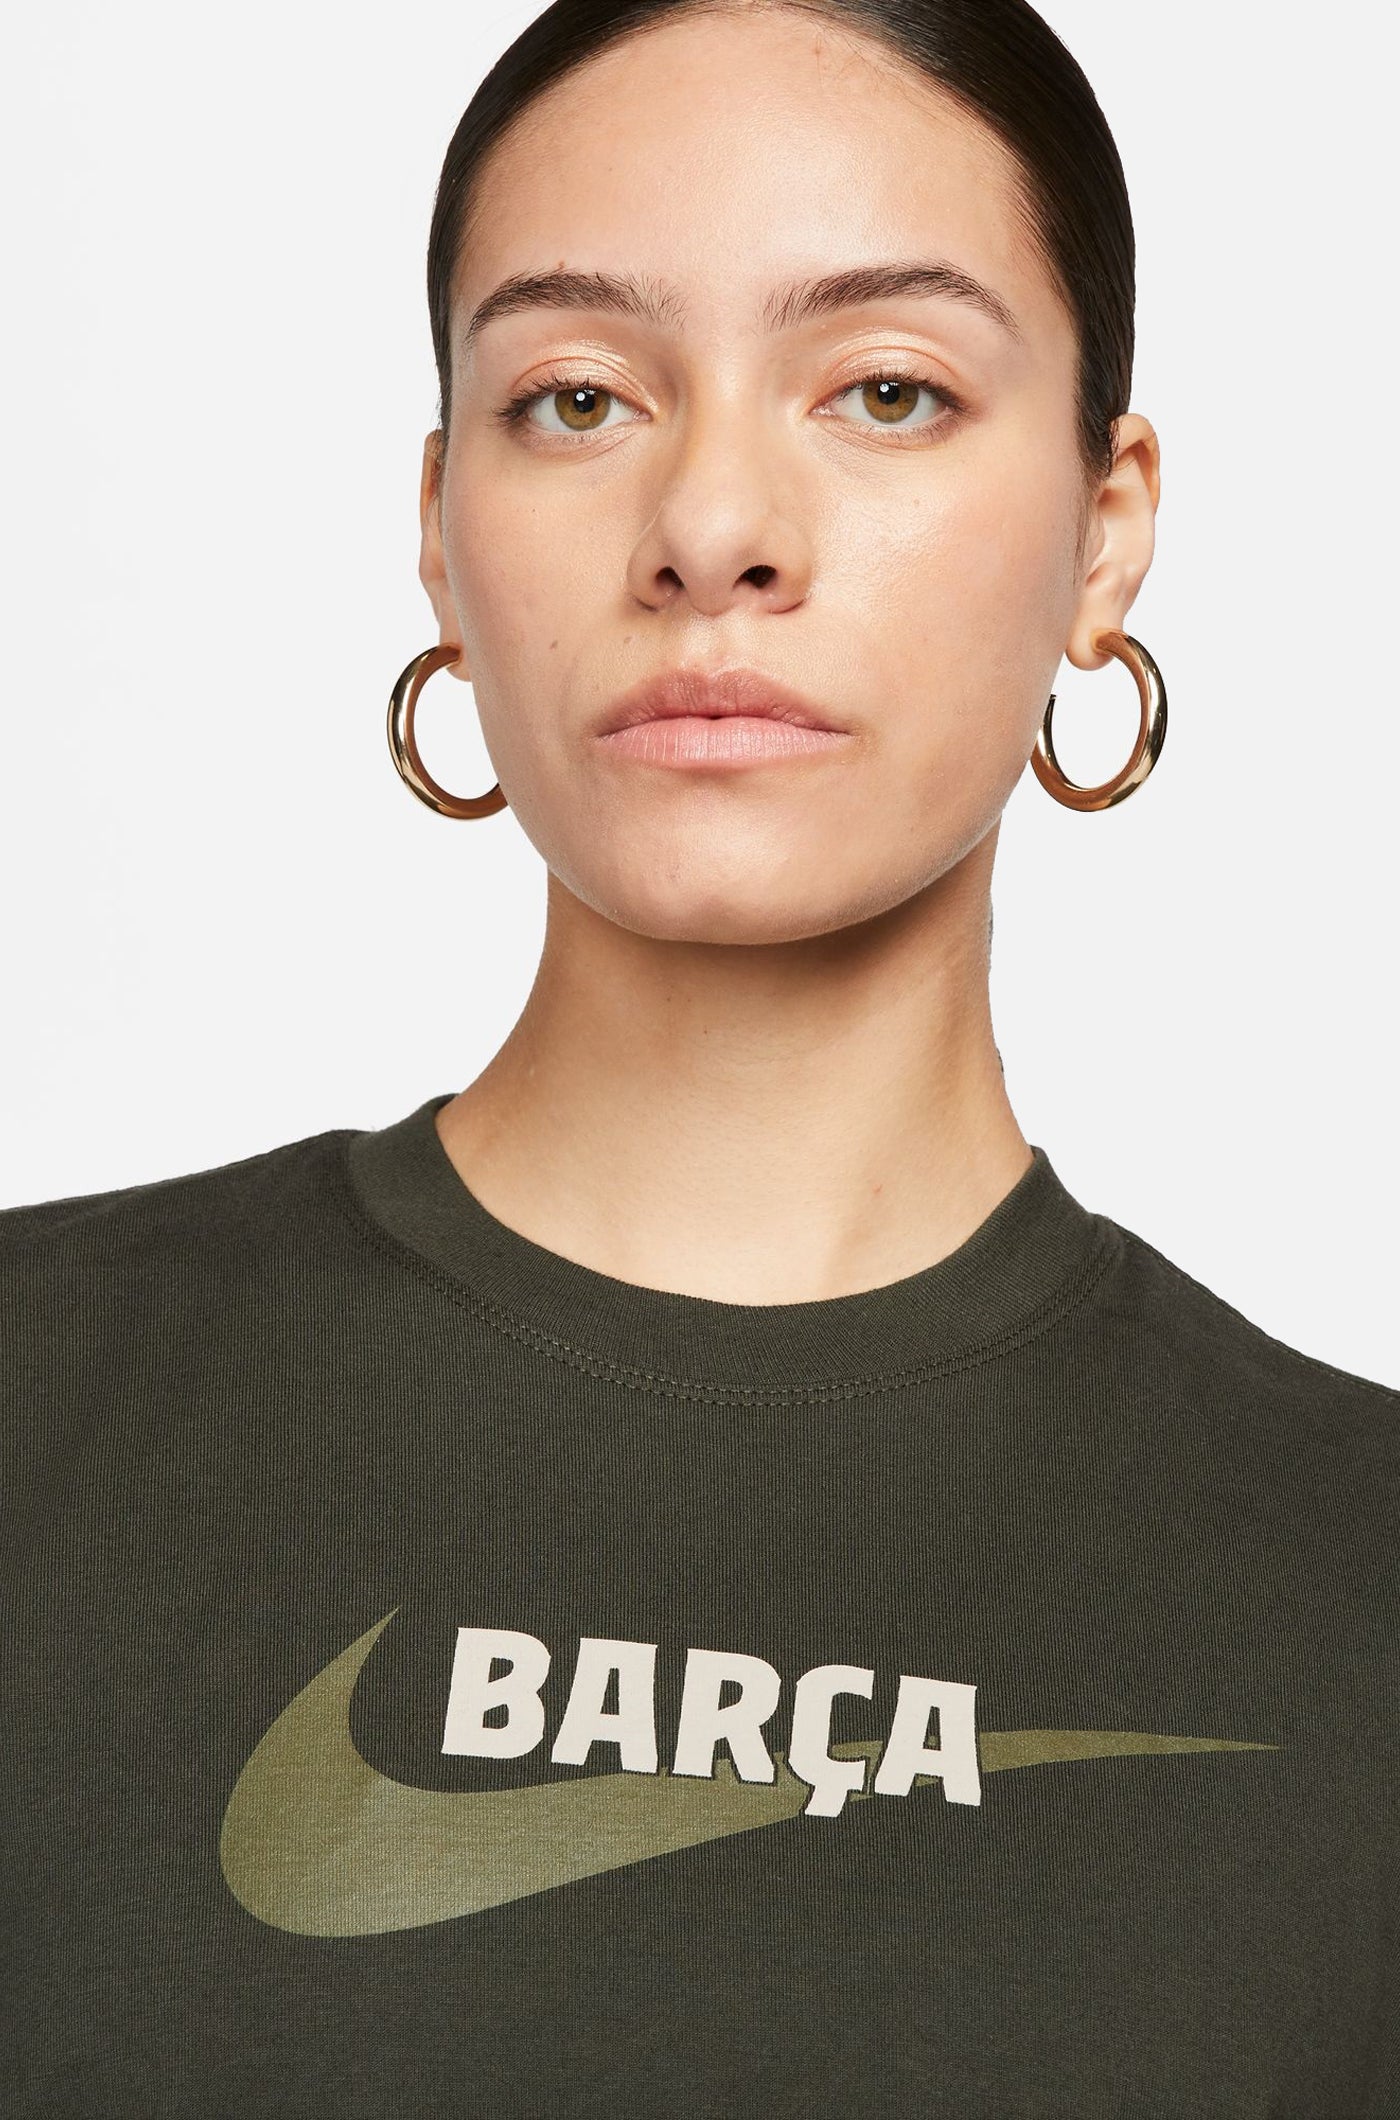 Trikot Grünes von Barça Nike - Damen